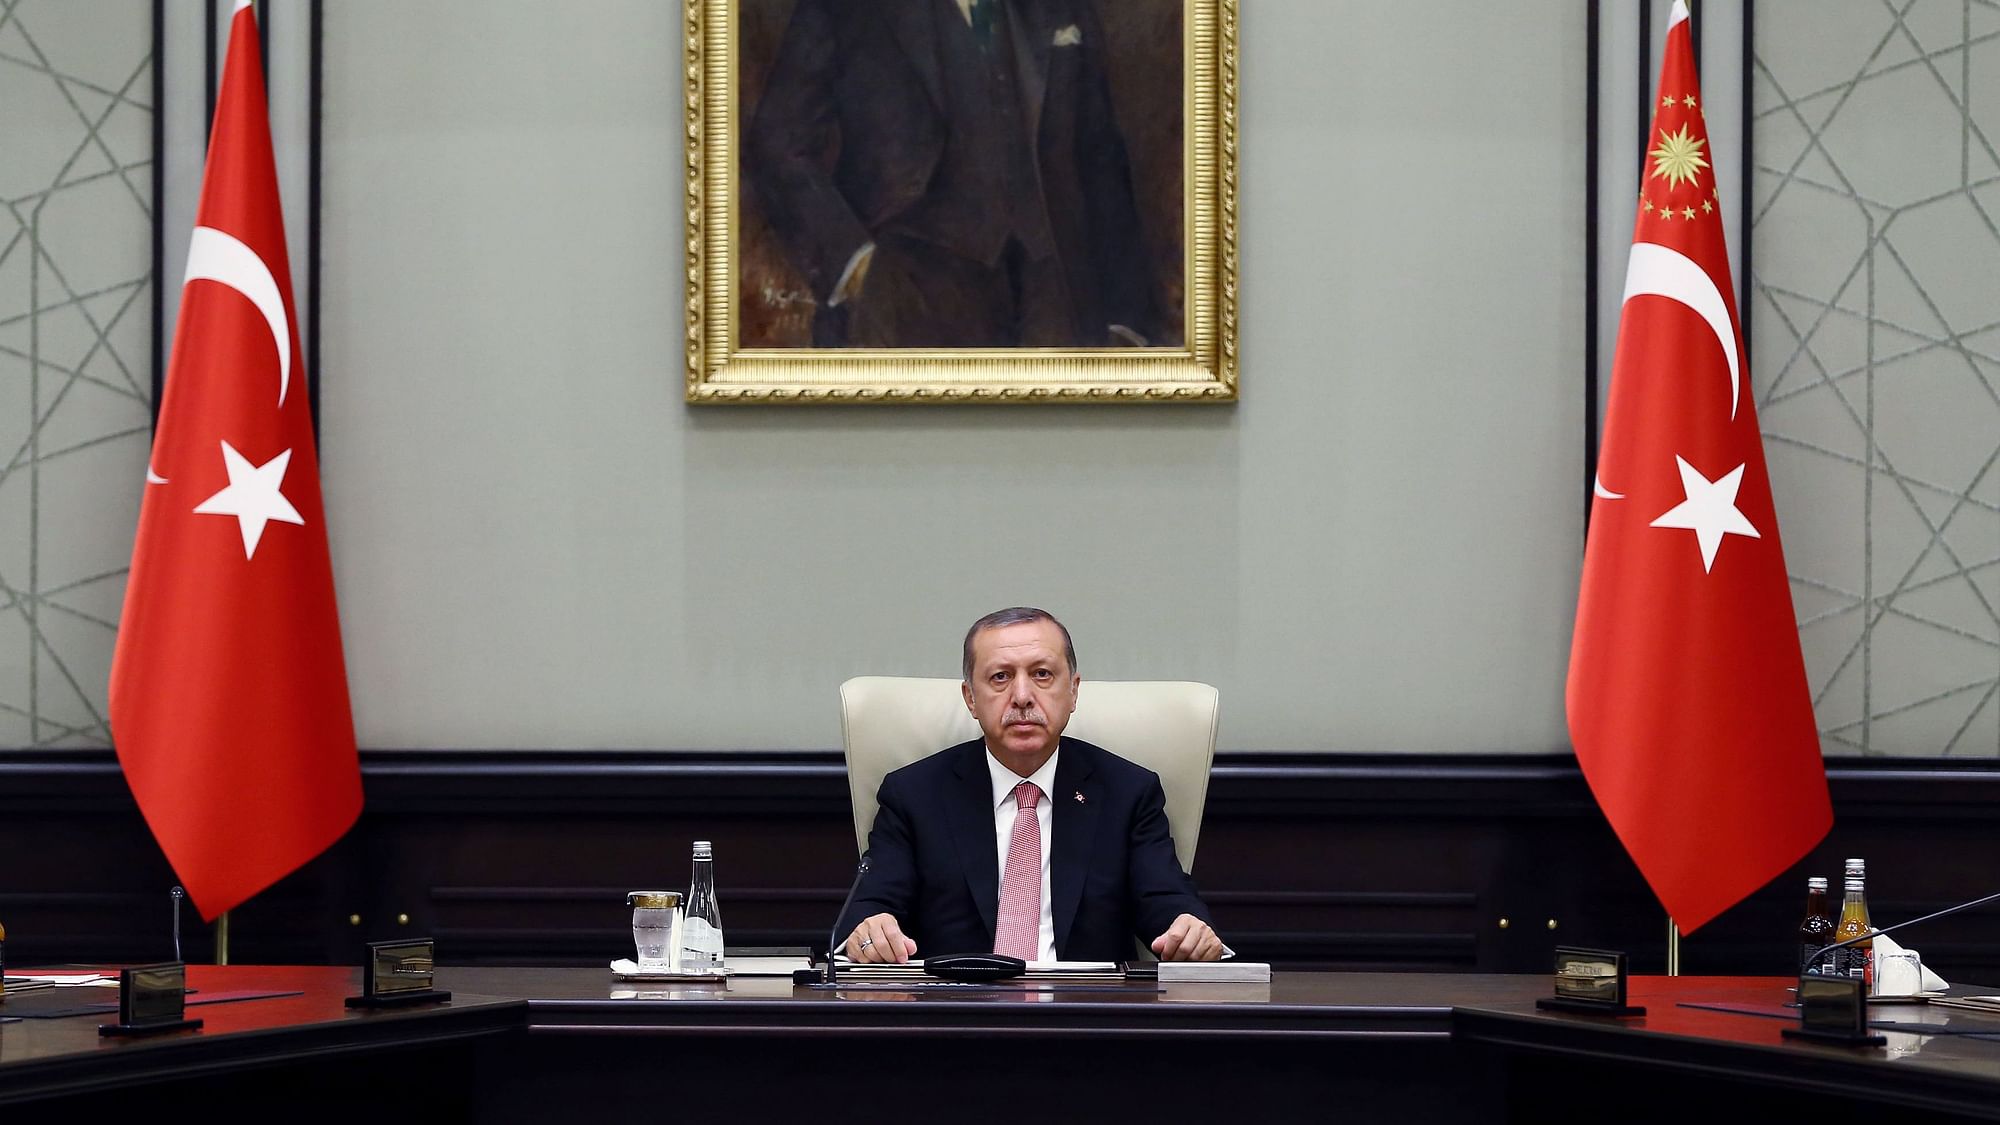 Turkey’s President Recep Tayyip Erdogan.